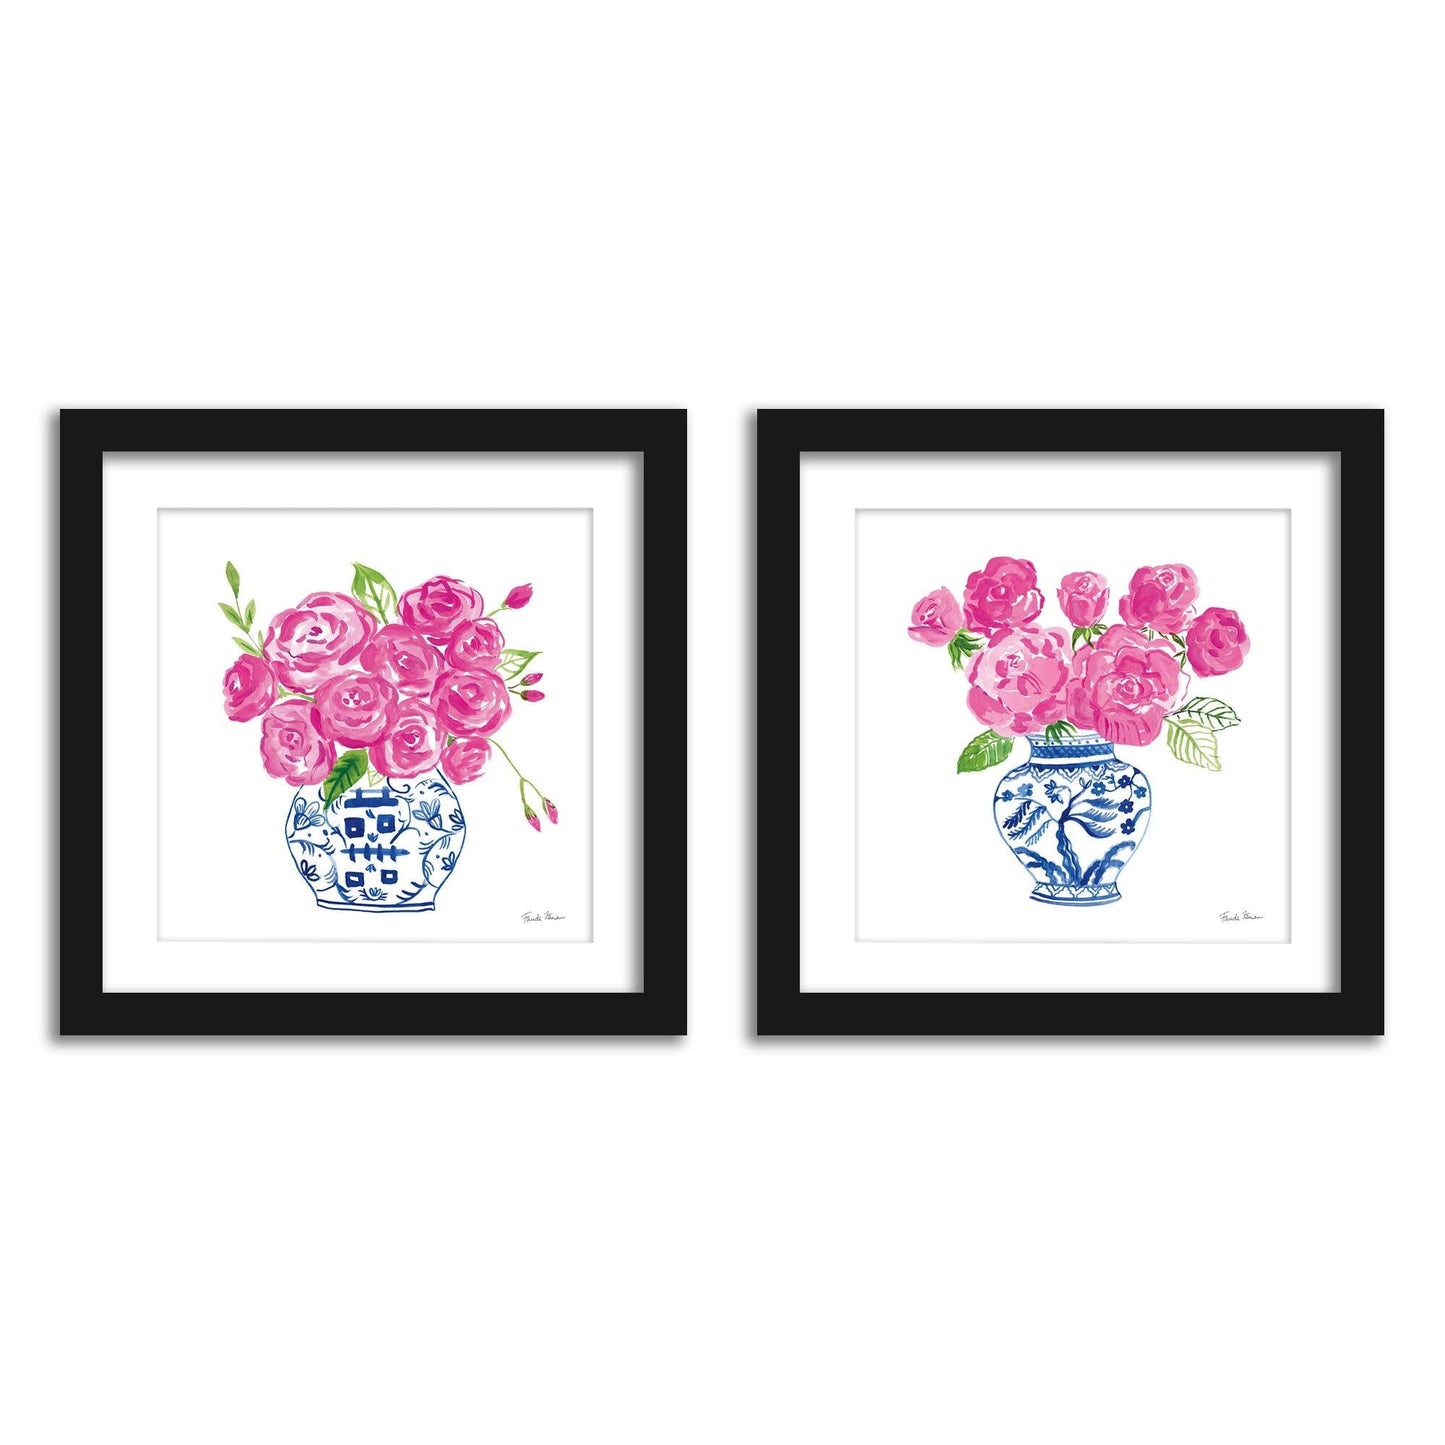  Roses On White Bathroom Wall Art - Set of 2 Framed Prints by Wild Apple